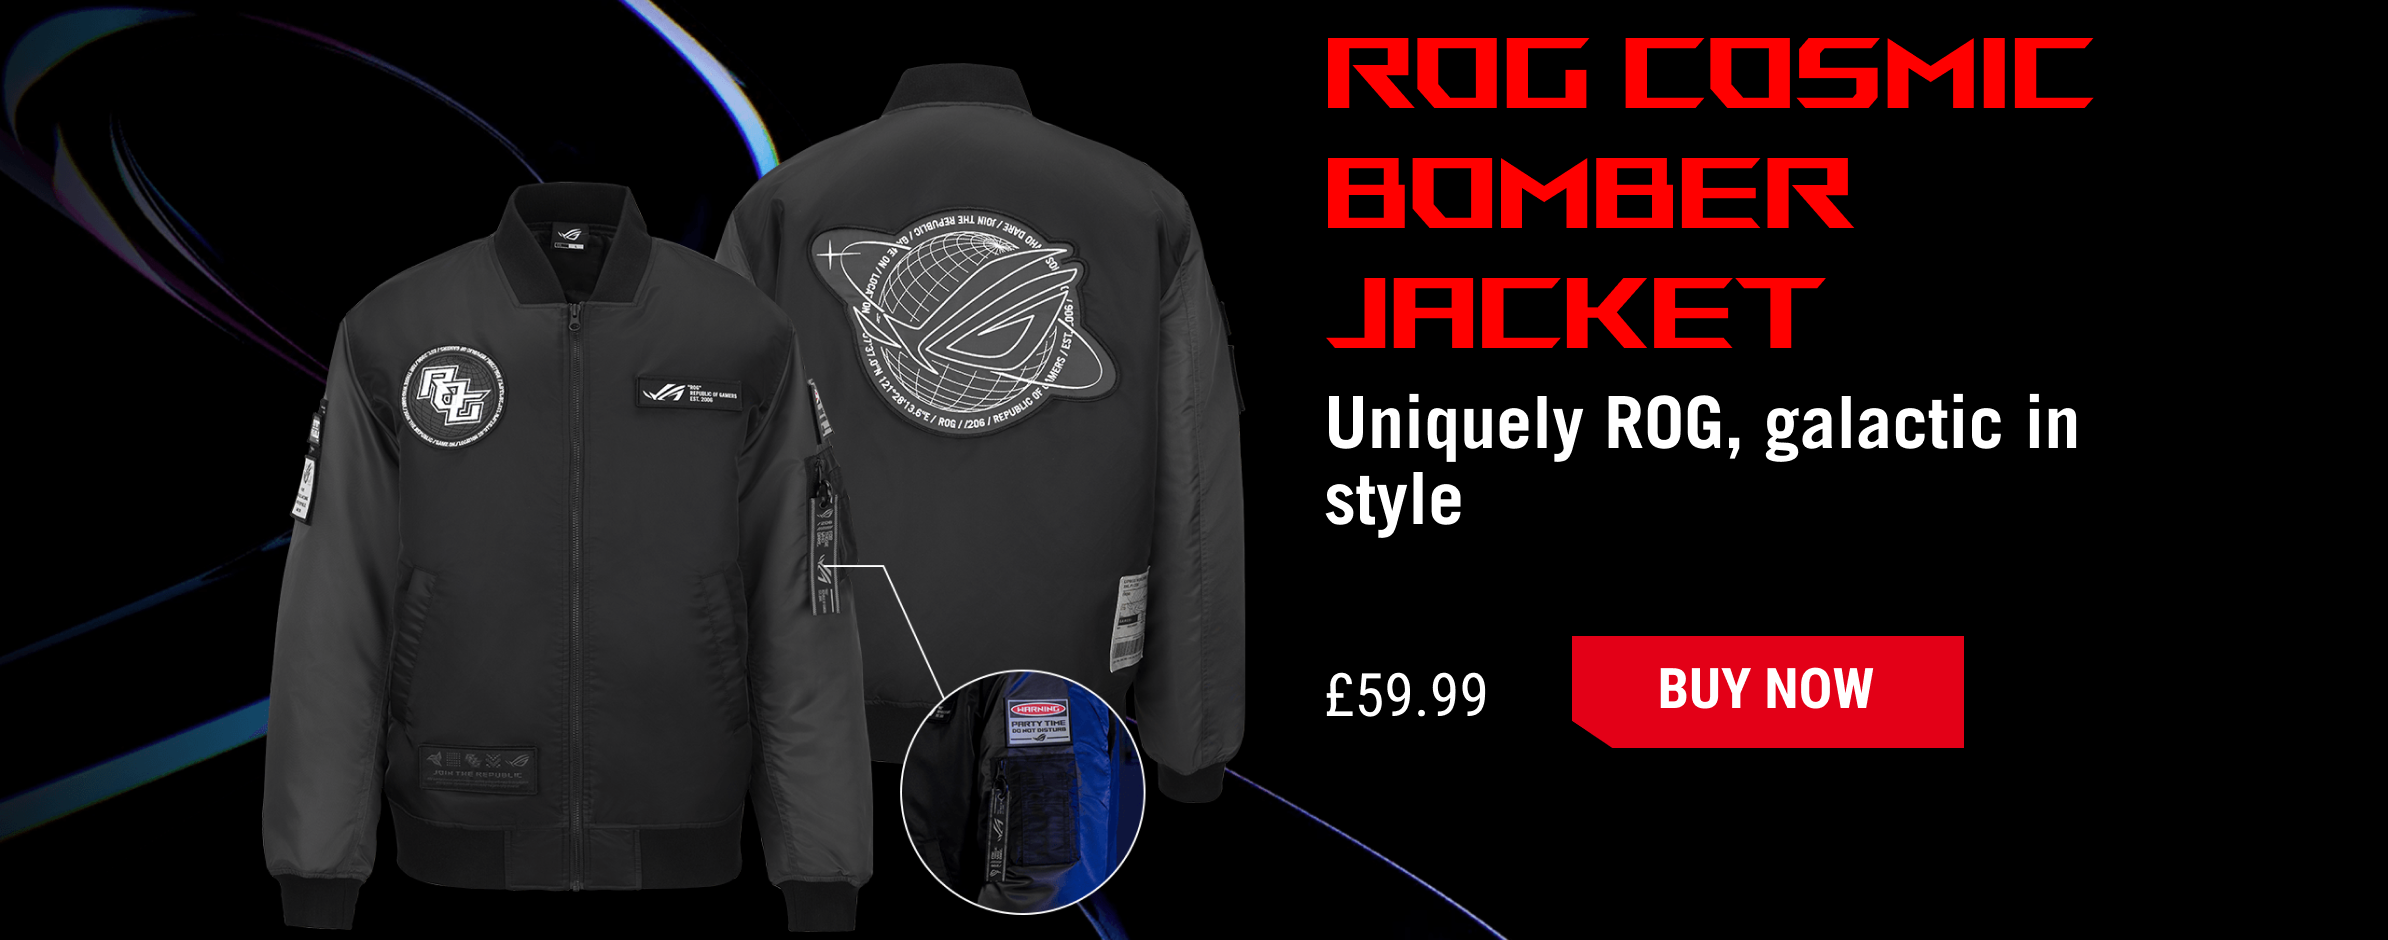 ROG Cosmic Bomber Jacket